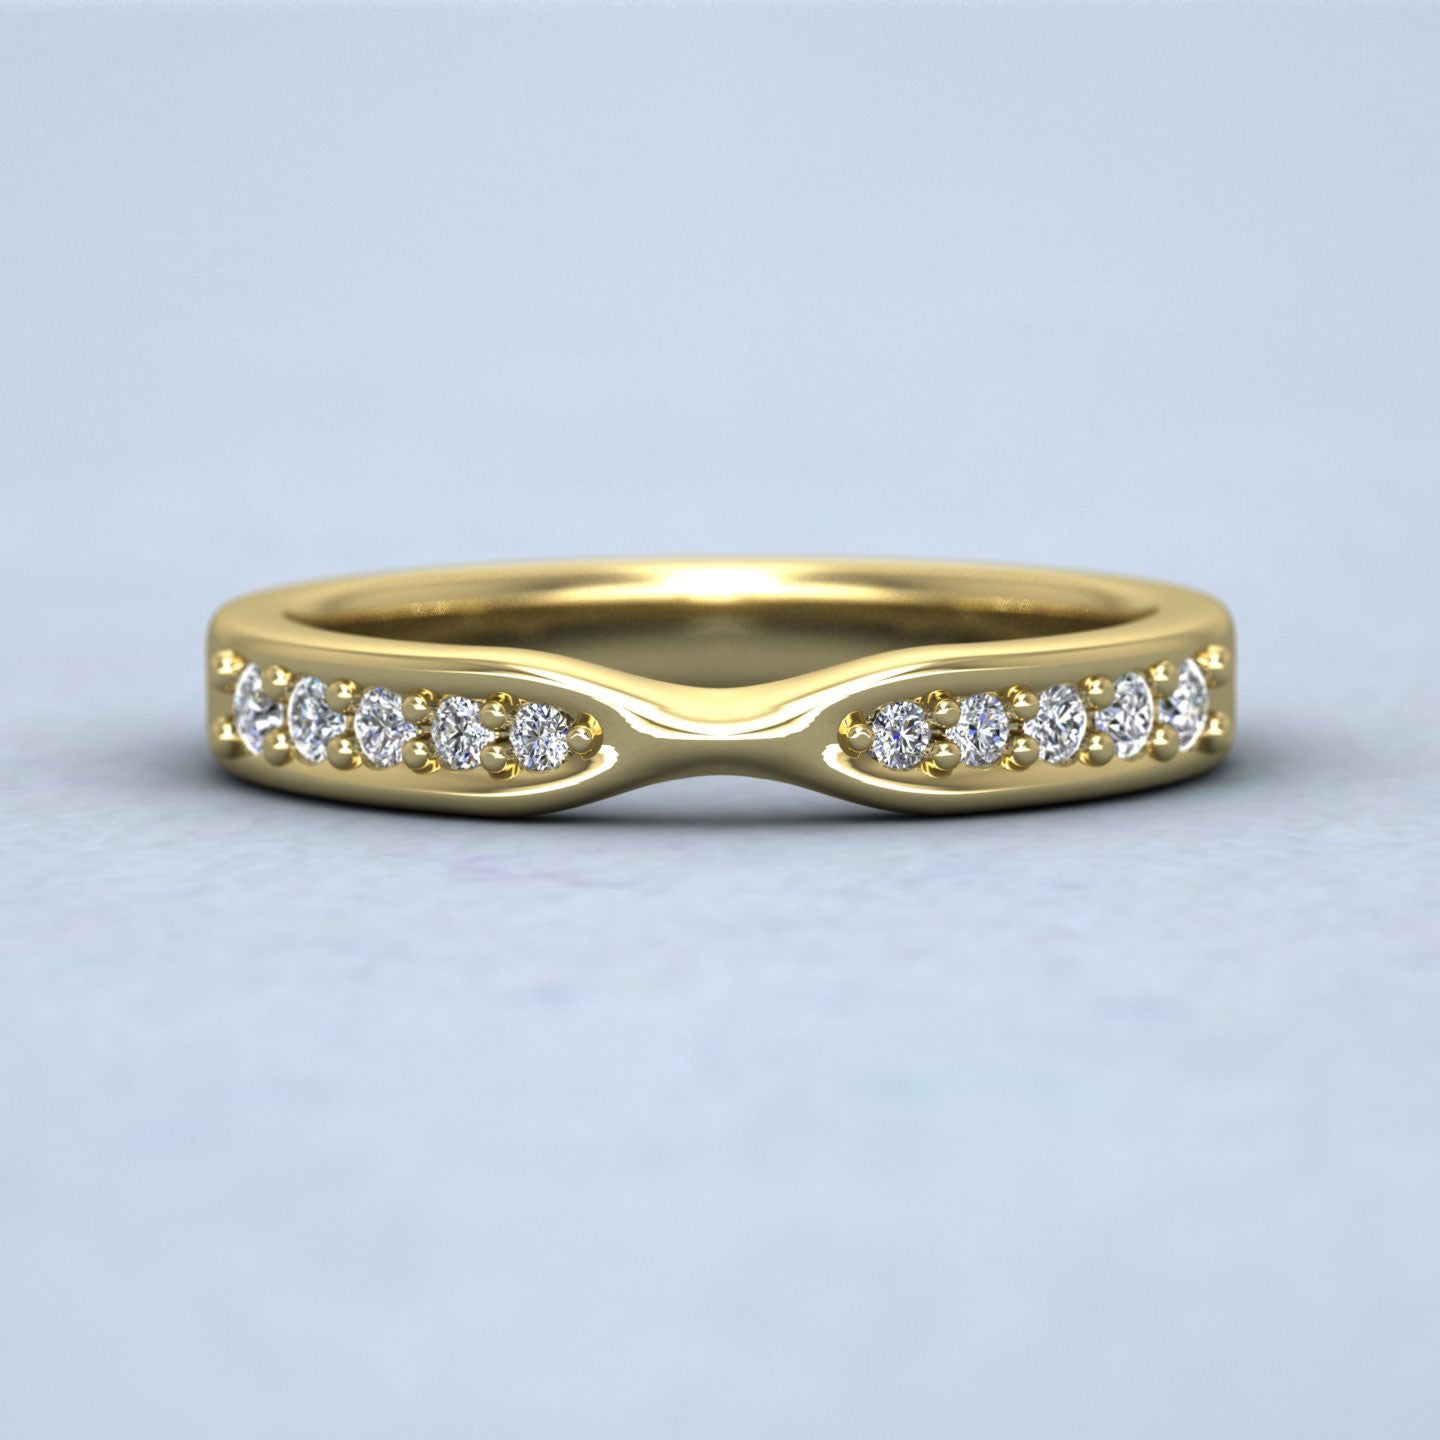 Pinch Design Wedding Ring With Diamonds 9ct Yellow Gold 3mm Wedding Ring